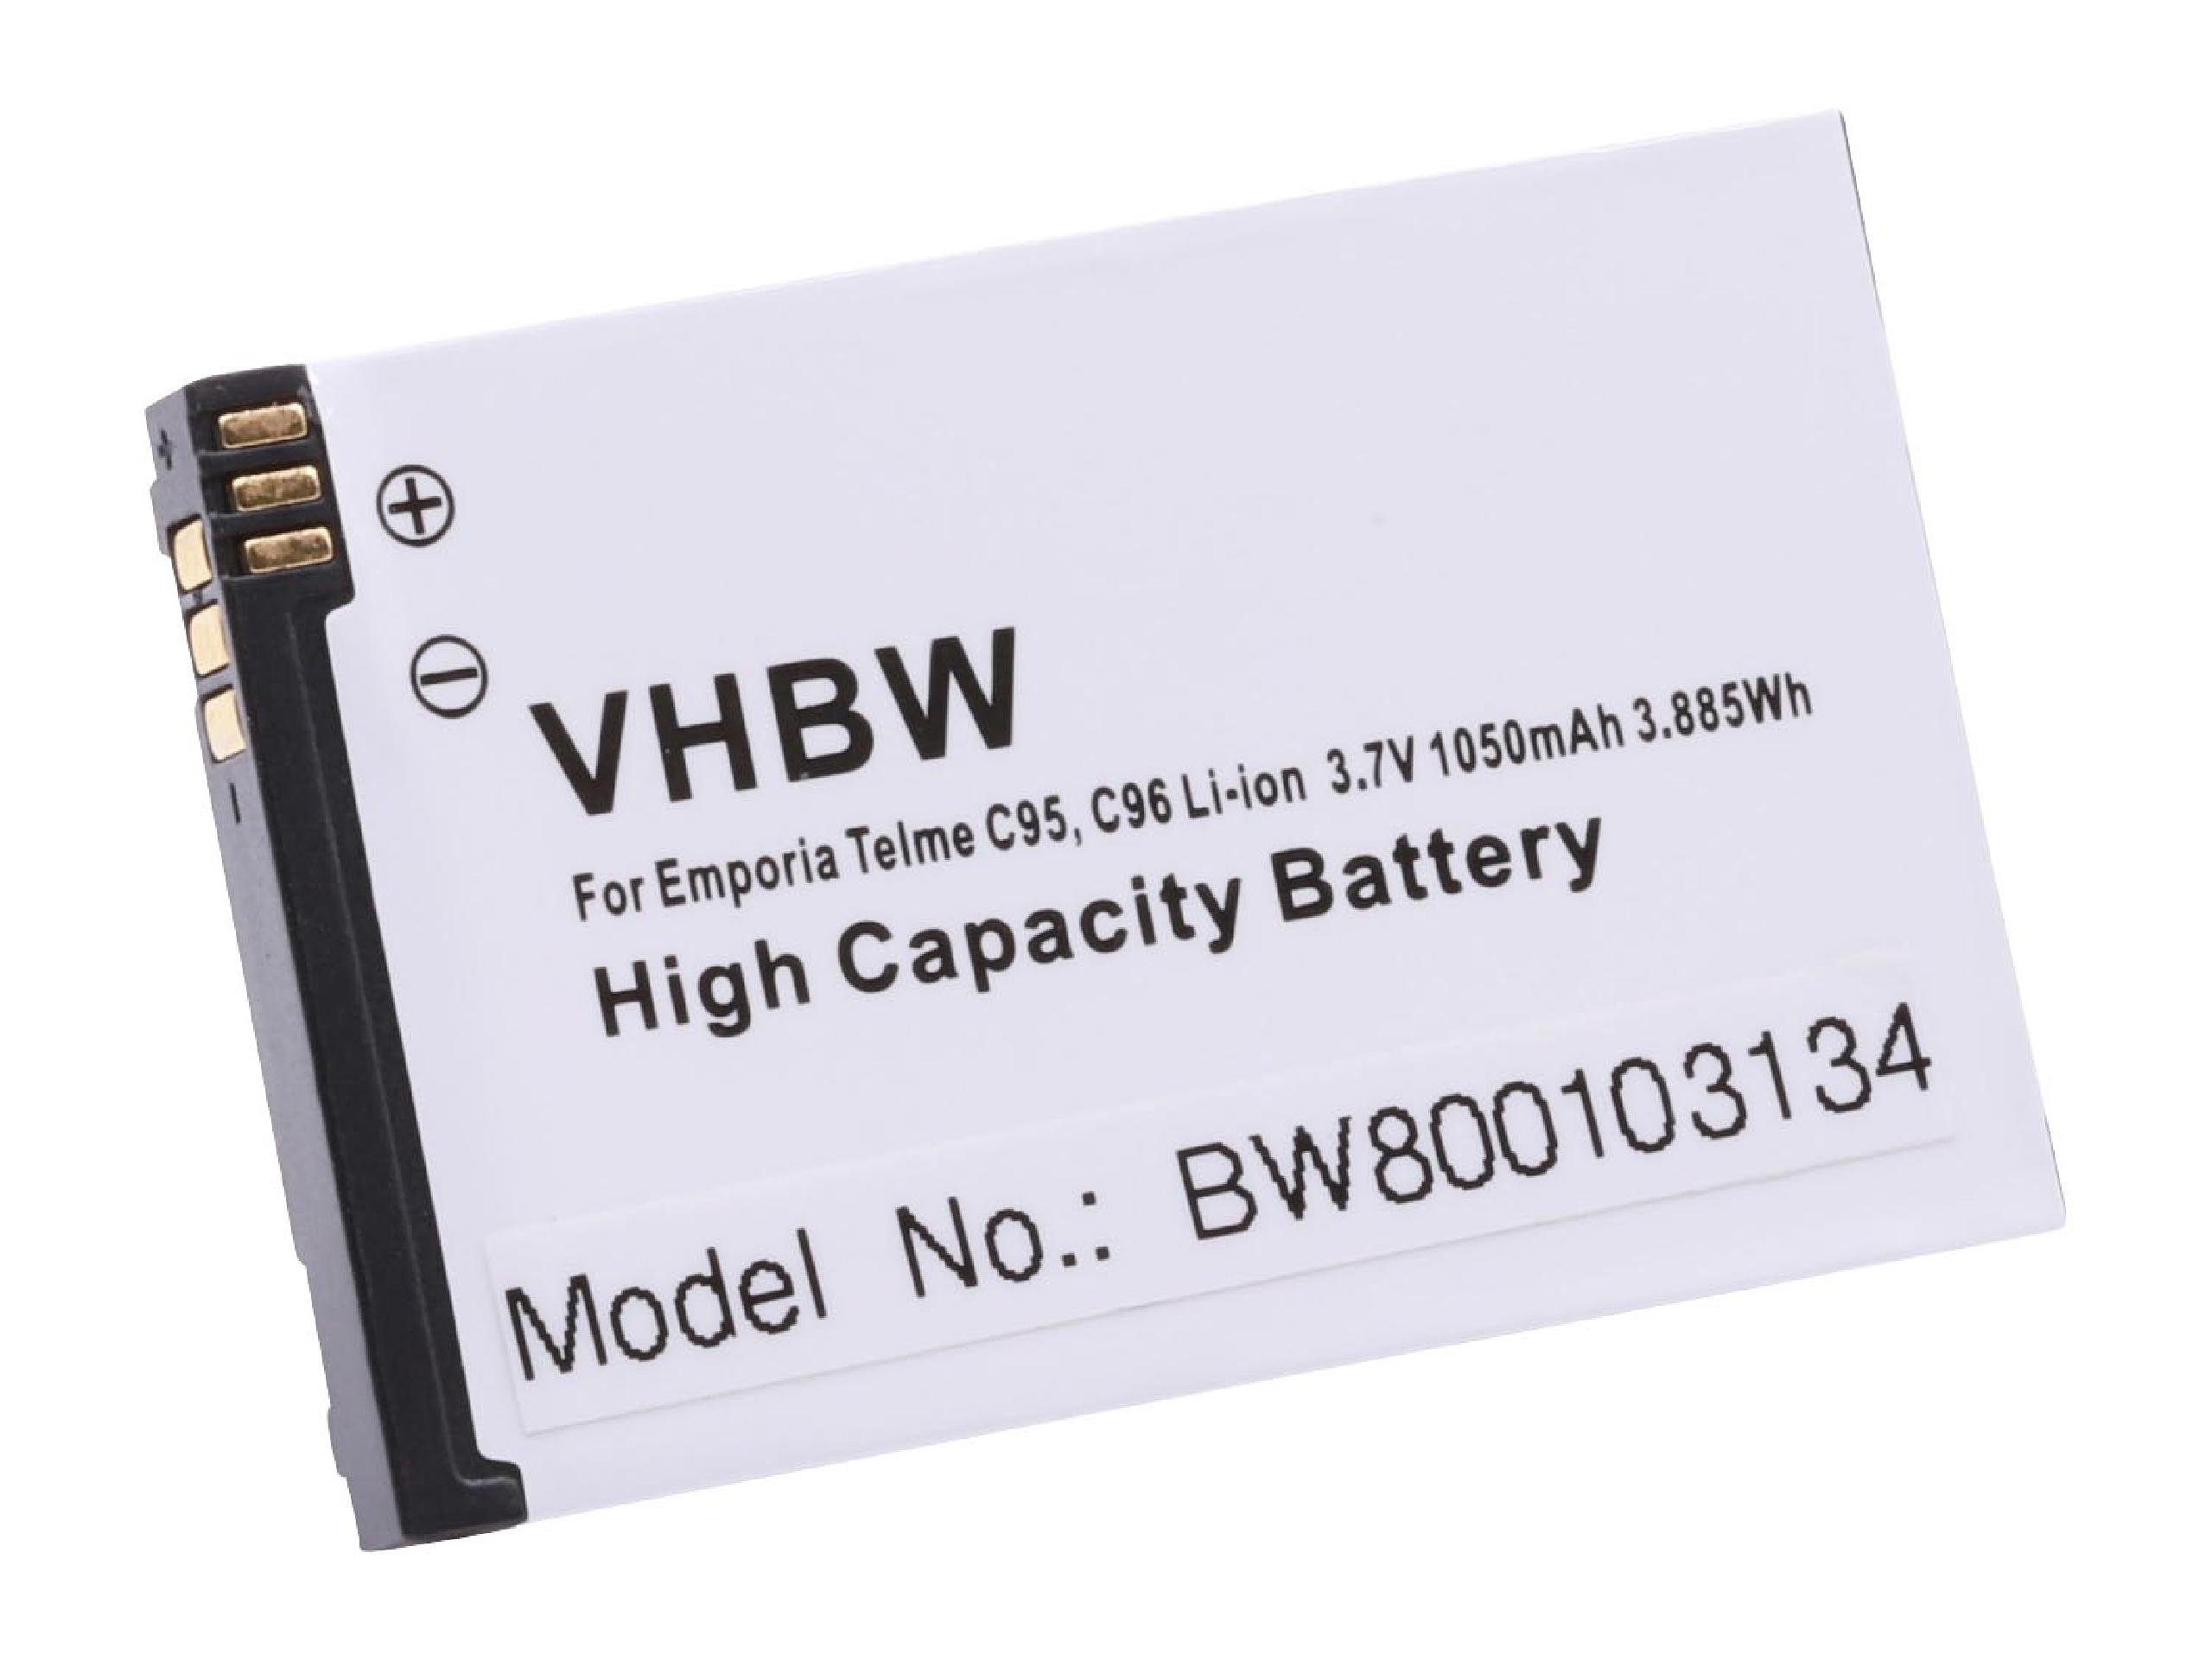 vhbw kompatibel mit Emporia Telme C100, C115, C95, C96, C135 Smartphone-Akku Li-Ion 1050 mAh (3,7 V)